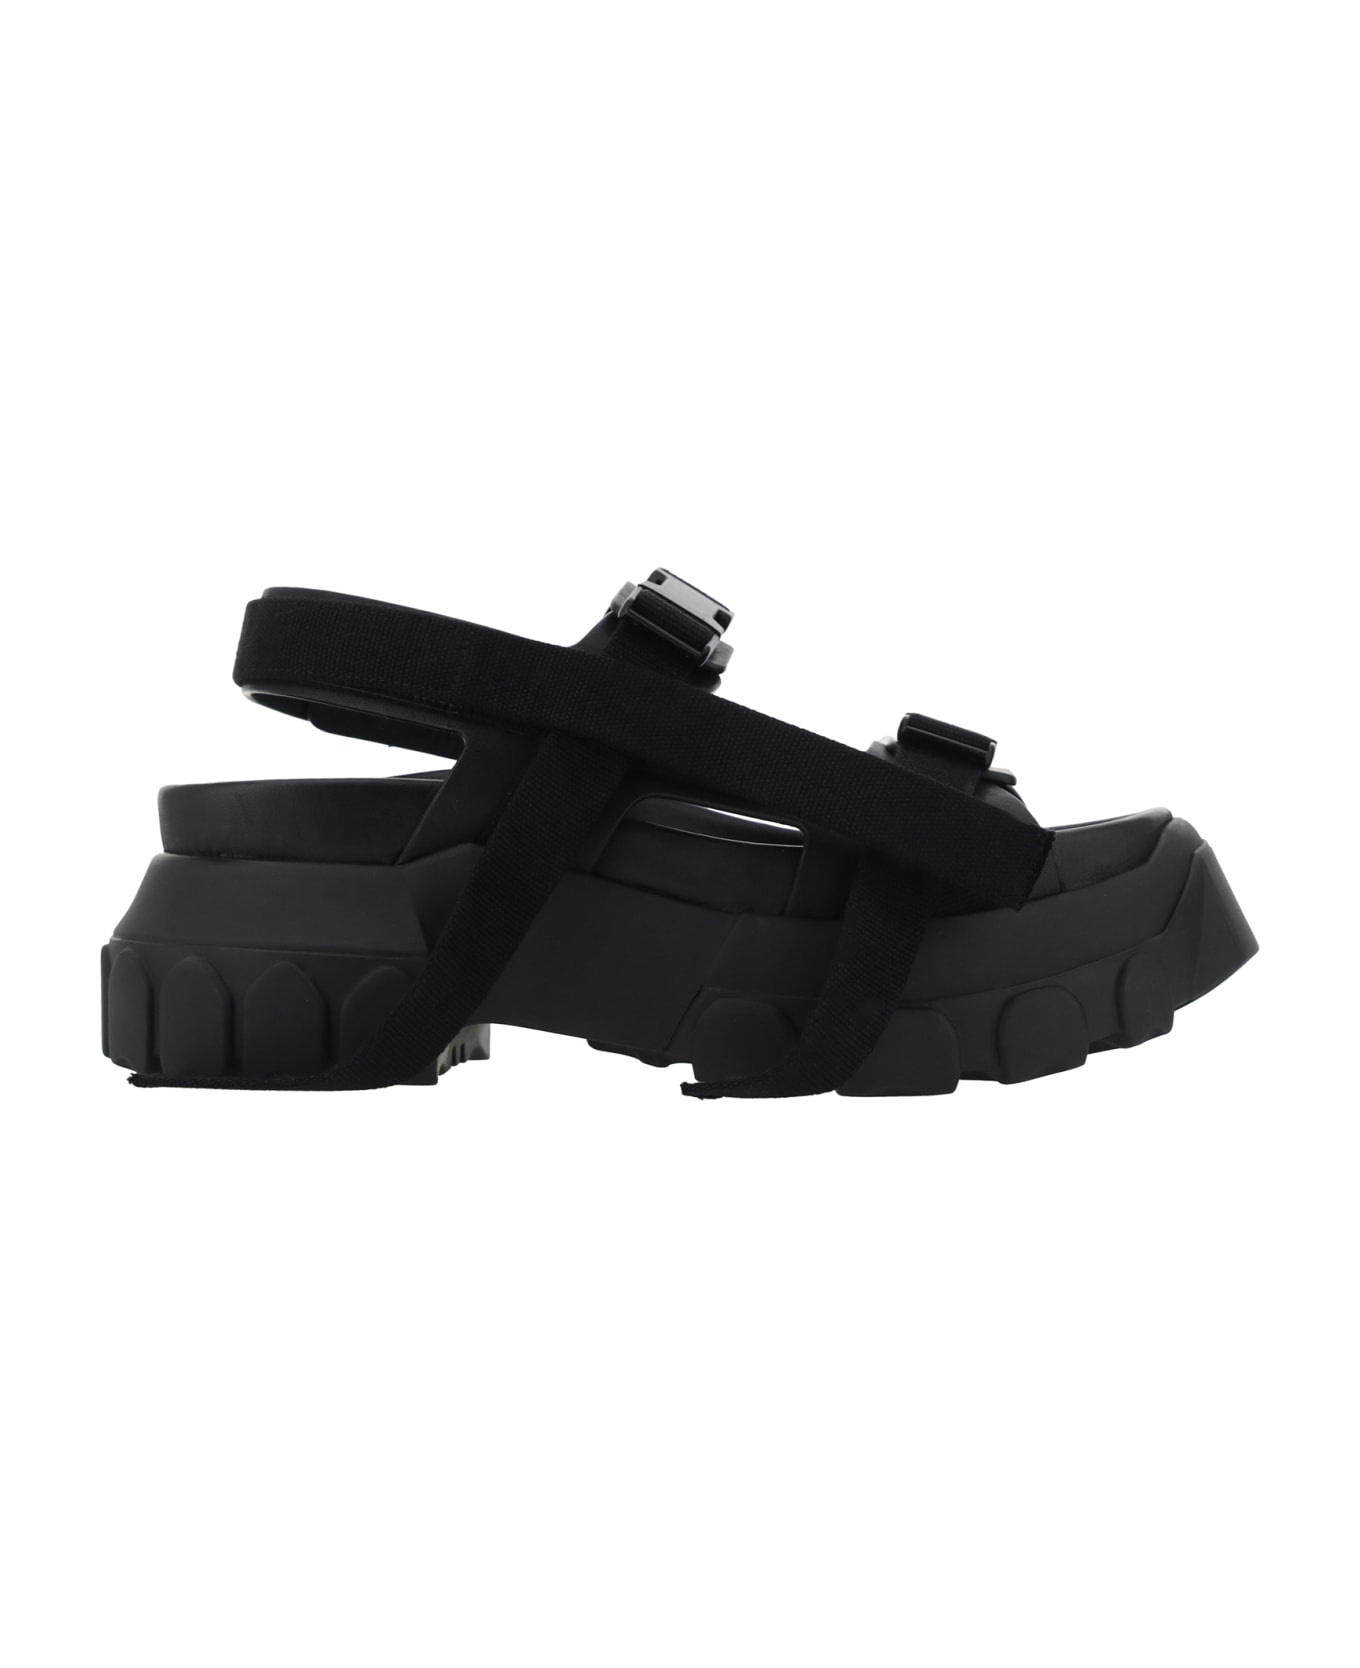 Rick Owens Tractor Sandals - Black/black